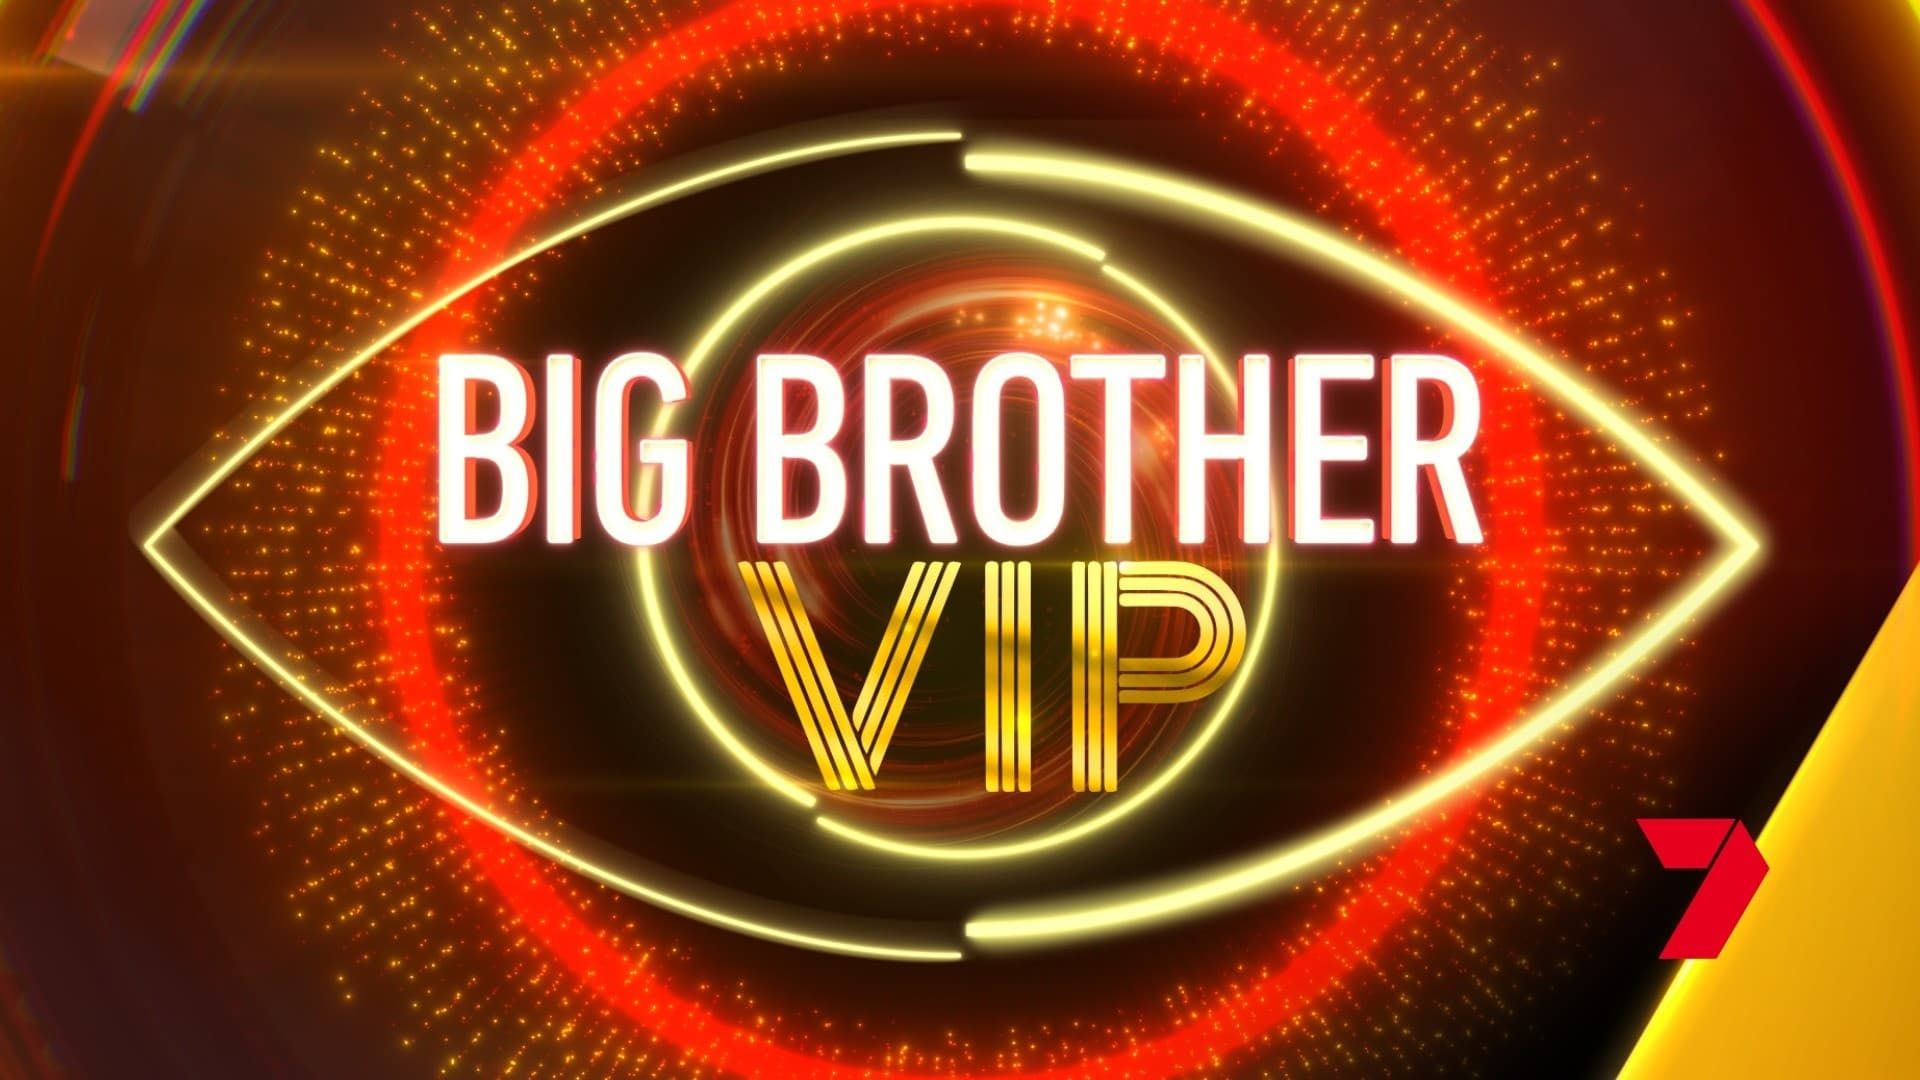 Big Brother VIP background